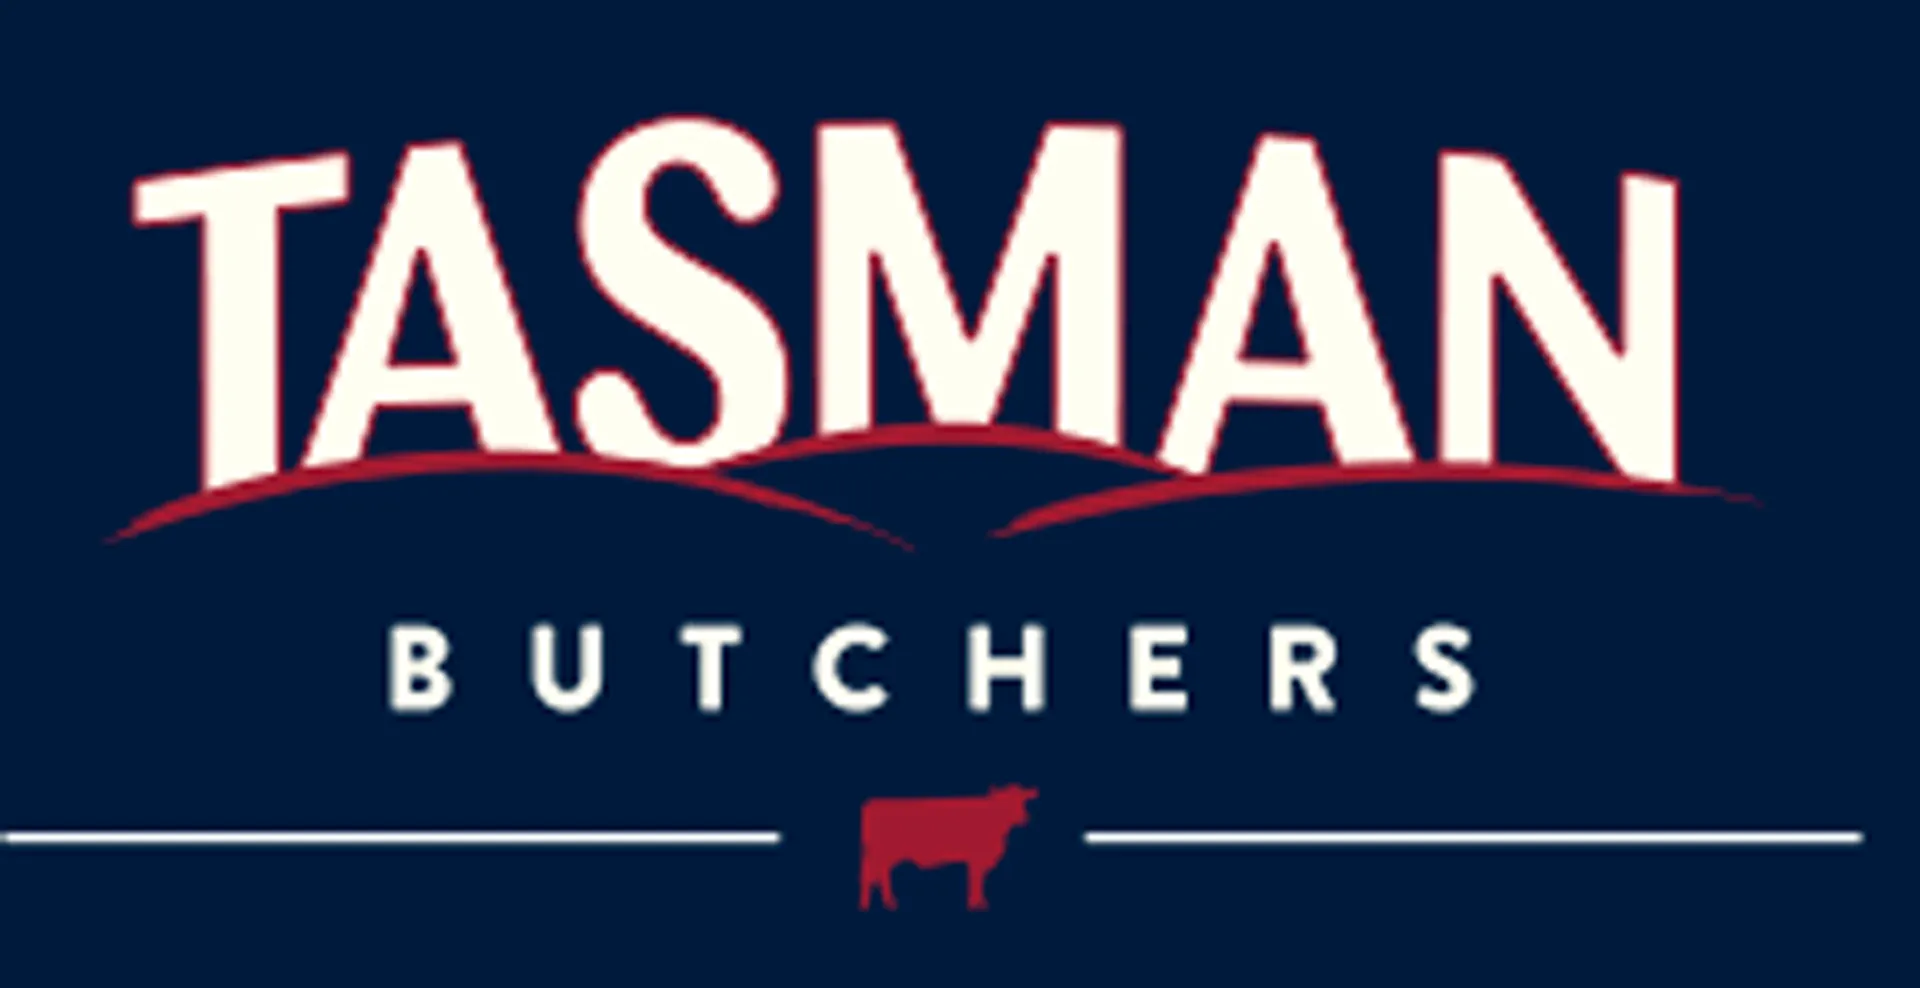 TASMAN BUTCHERS logo of current catalogue